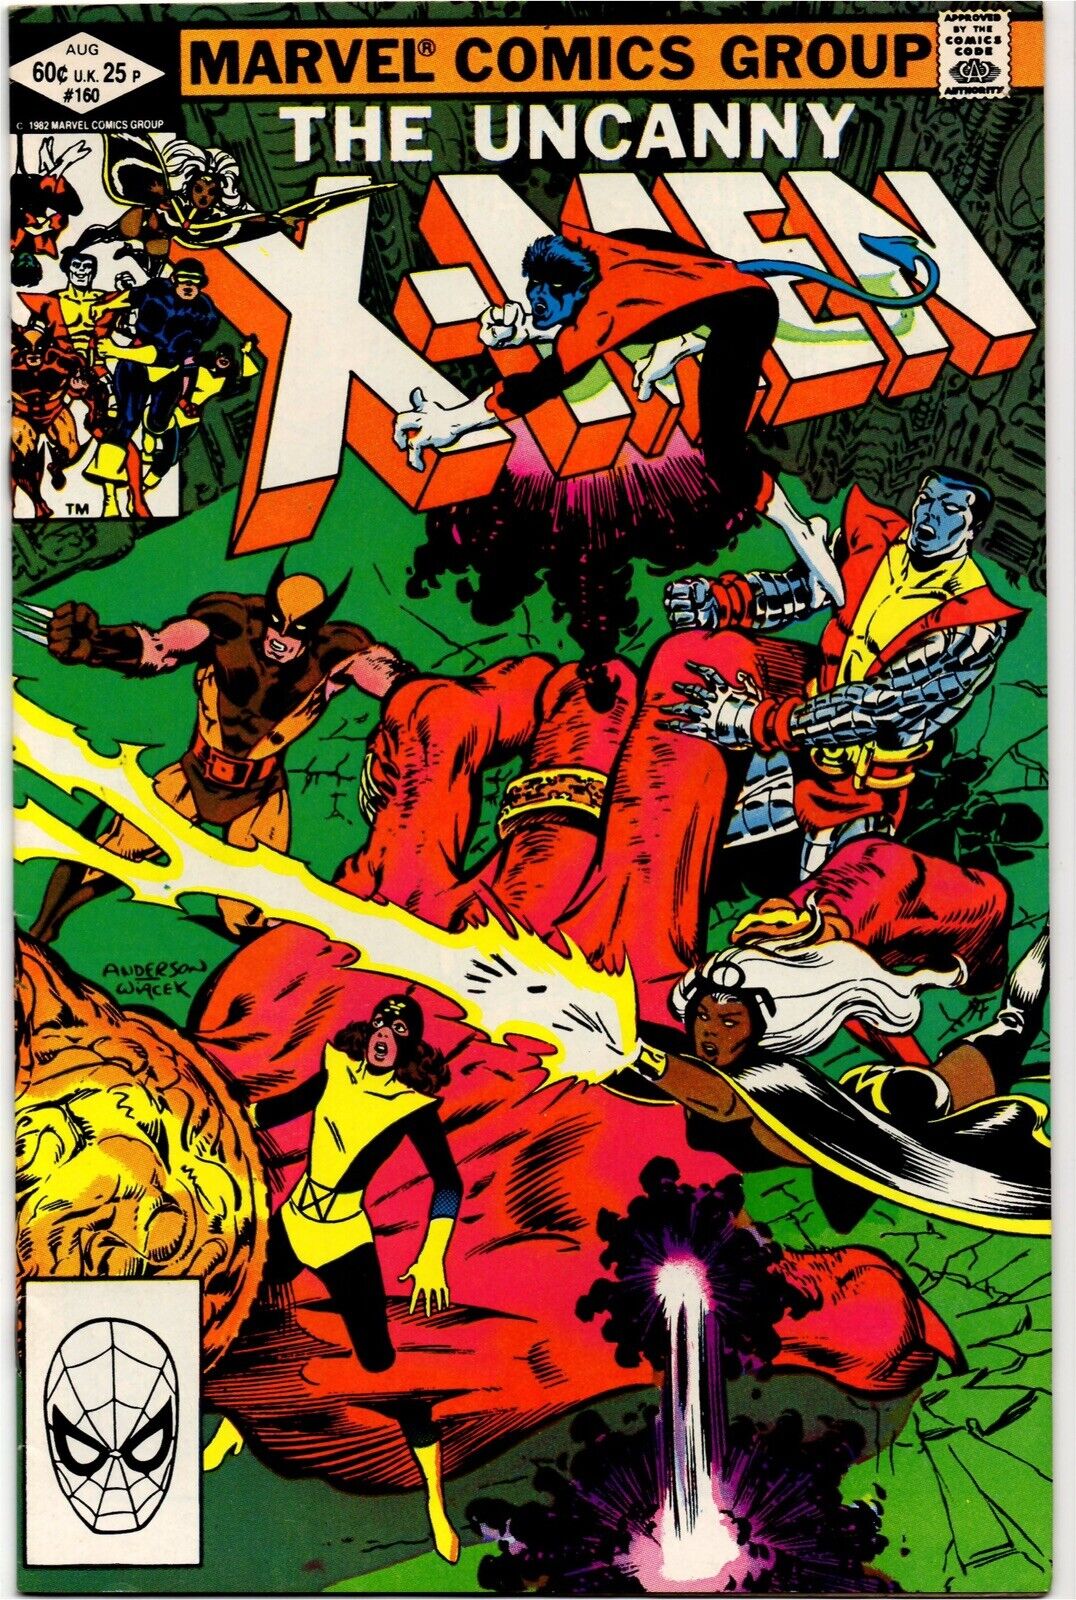 The Uncanny X-Men #160 - Aug 1982 - Vol.1 - Marvel - Minor Key - 8.5 VF+